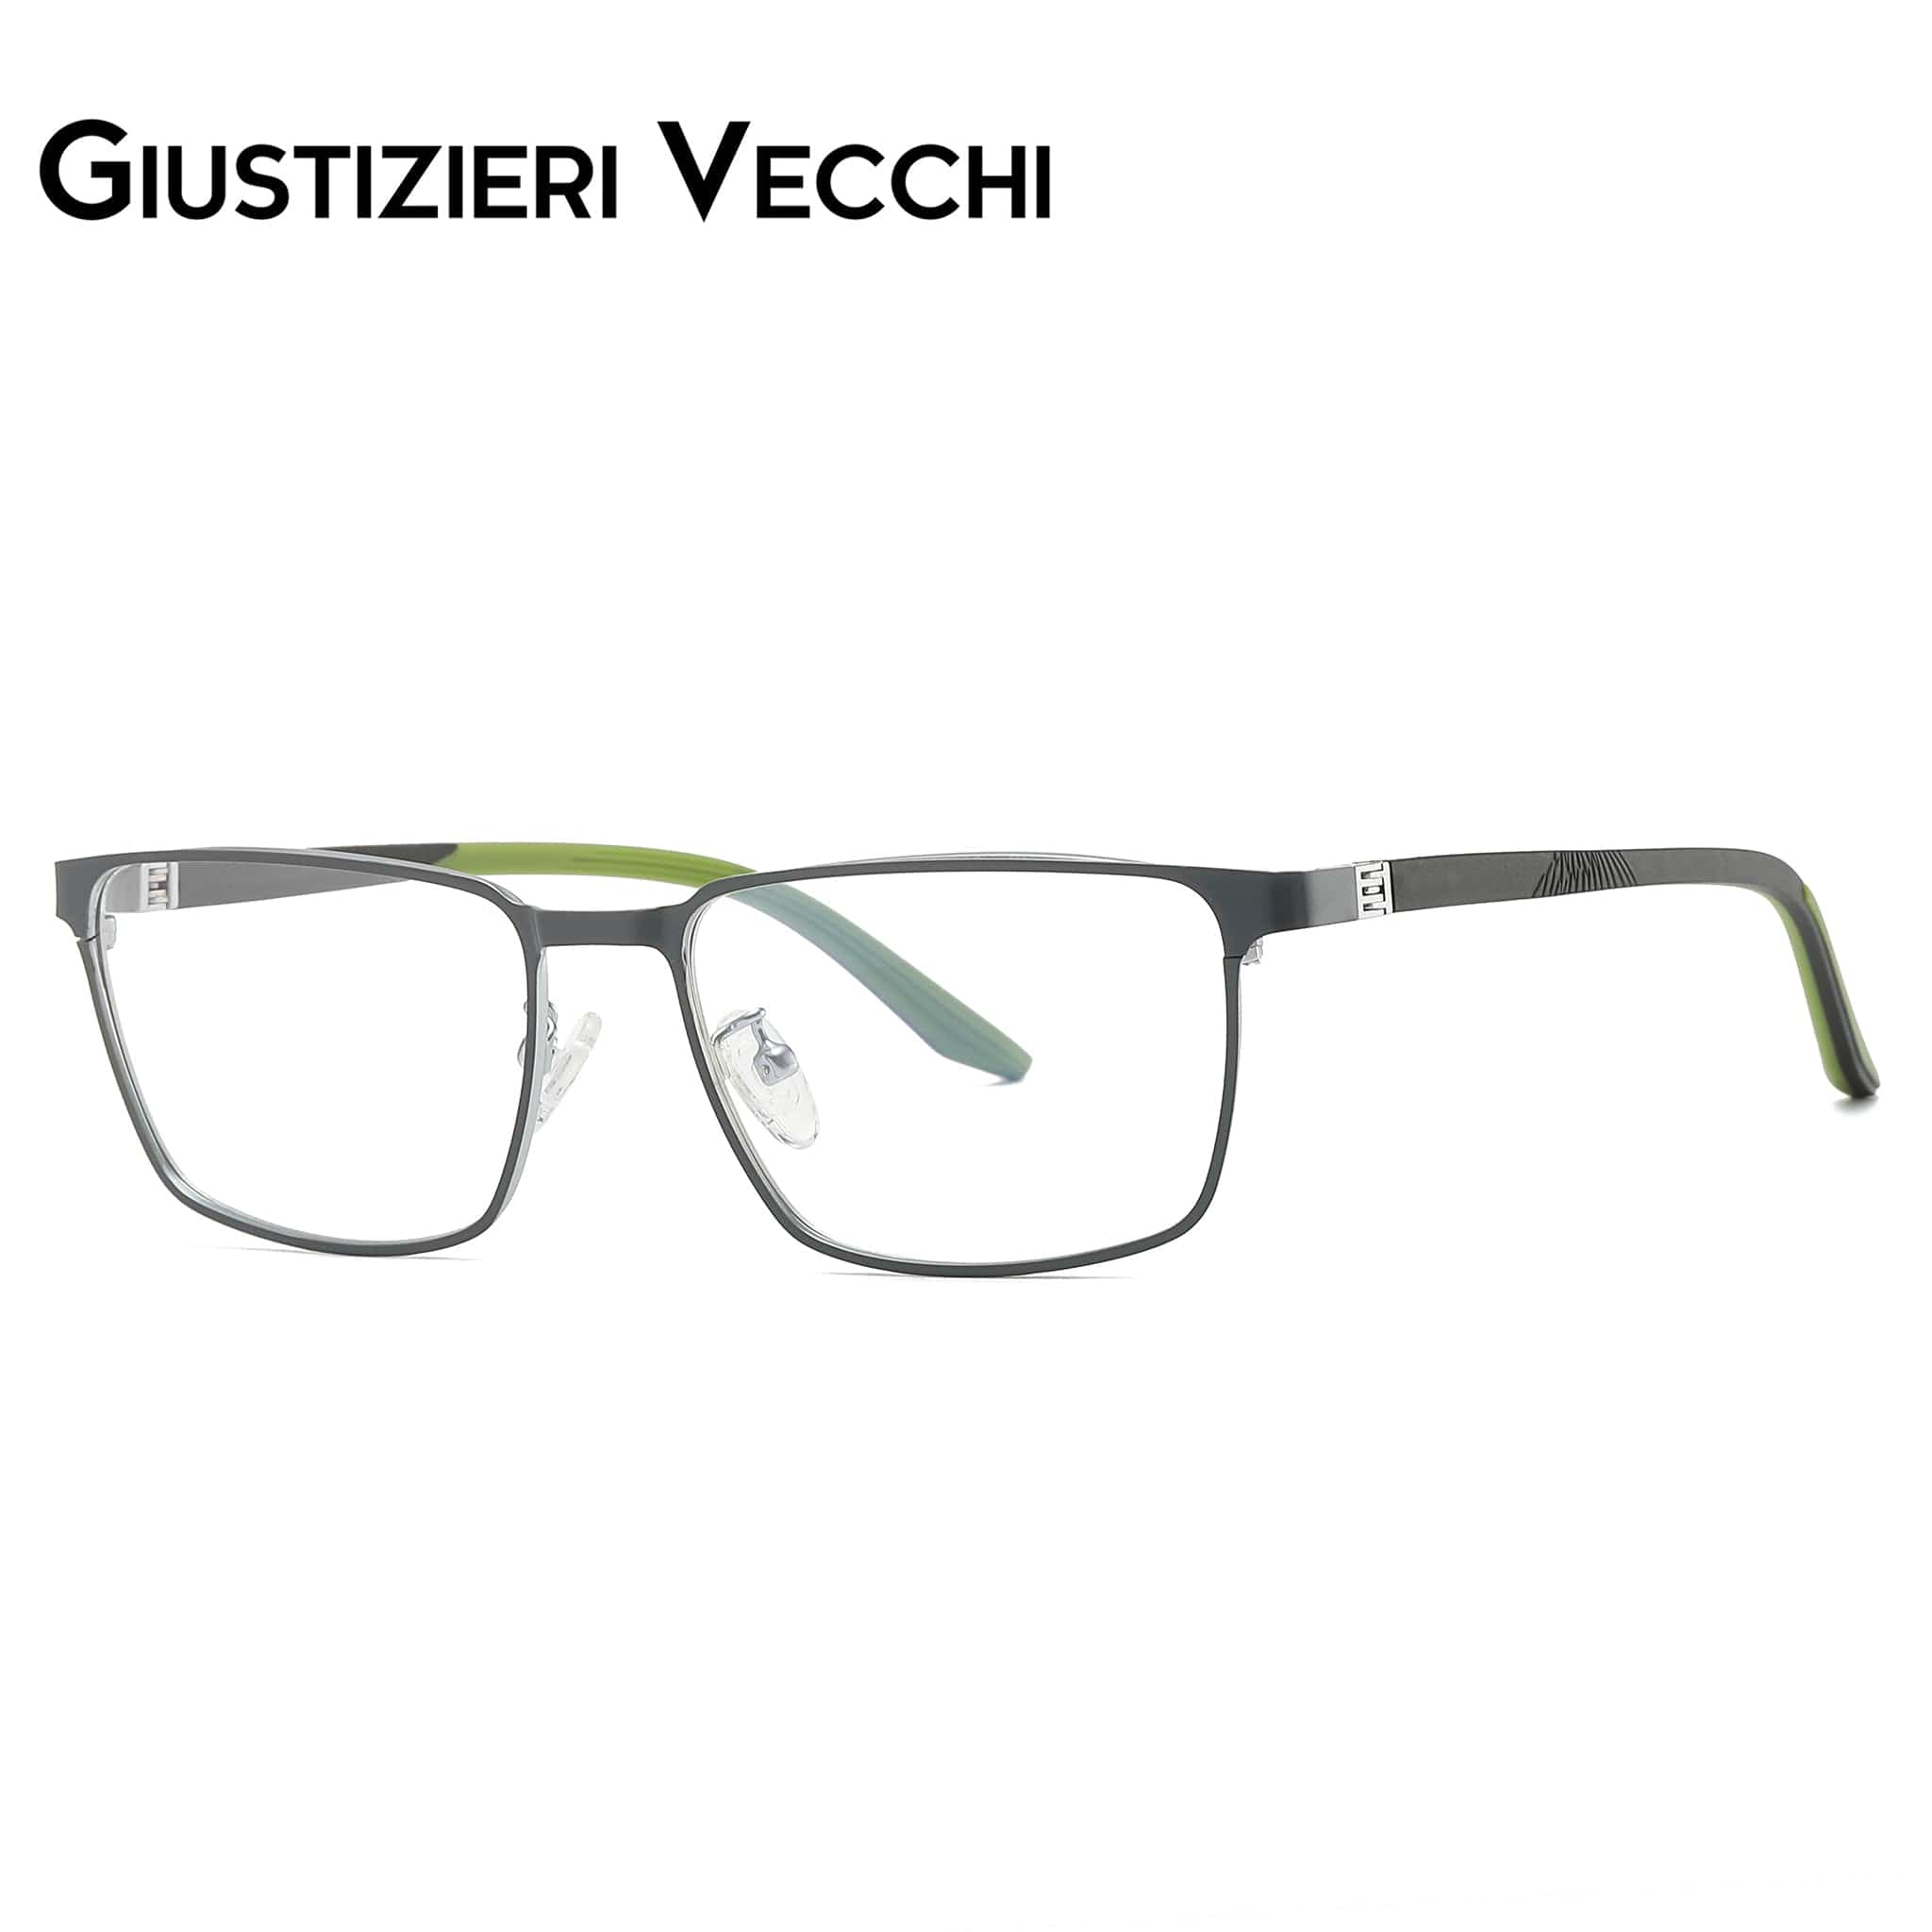 GIUSTIZIERI VECCHI Eyeglasses IceSurf Duo